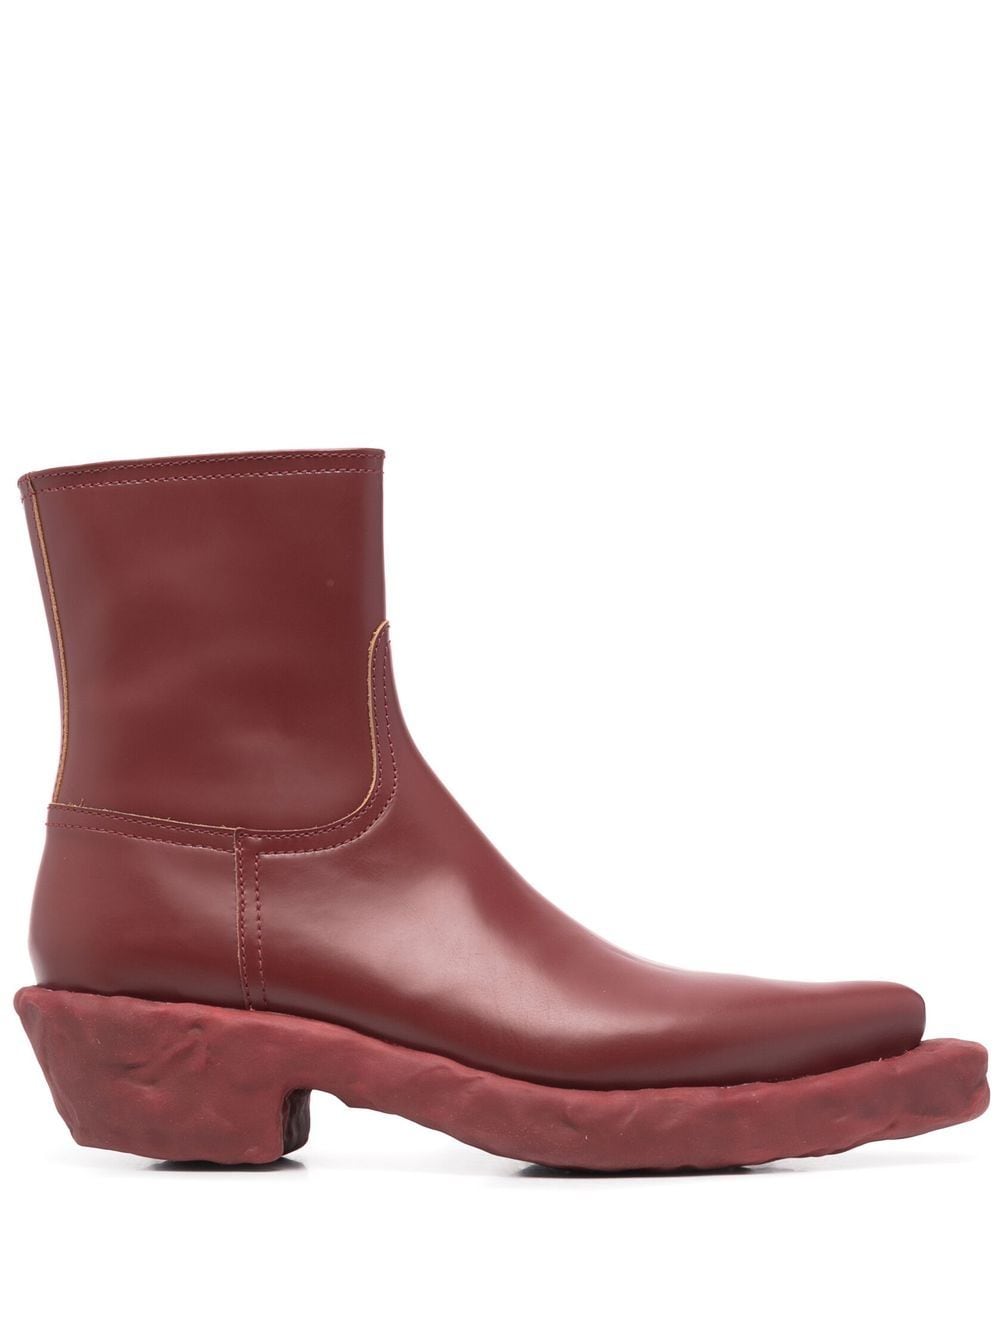 CamperLab Venga leather boots - Red von CamperLab